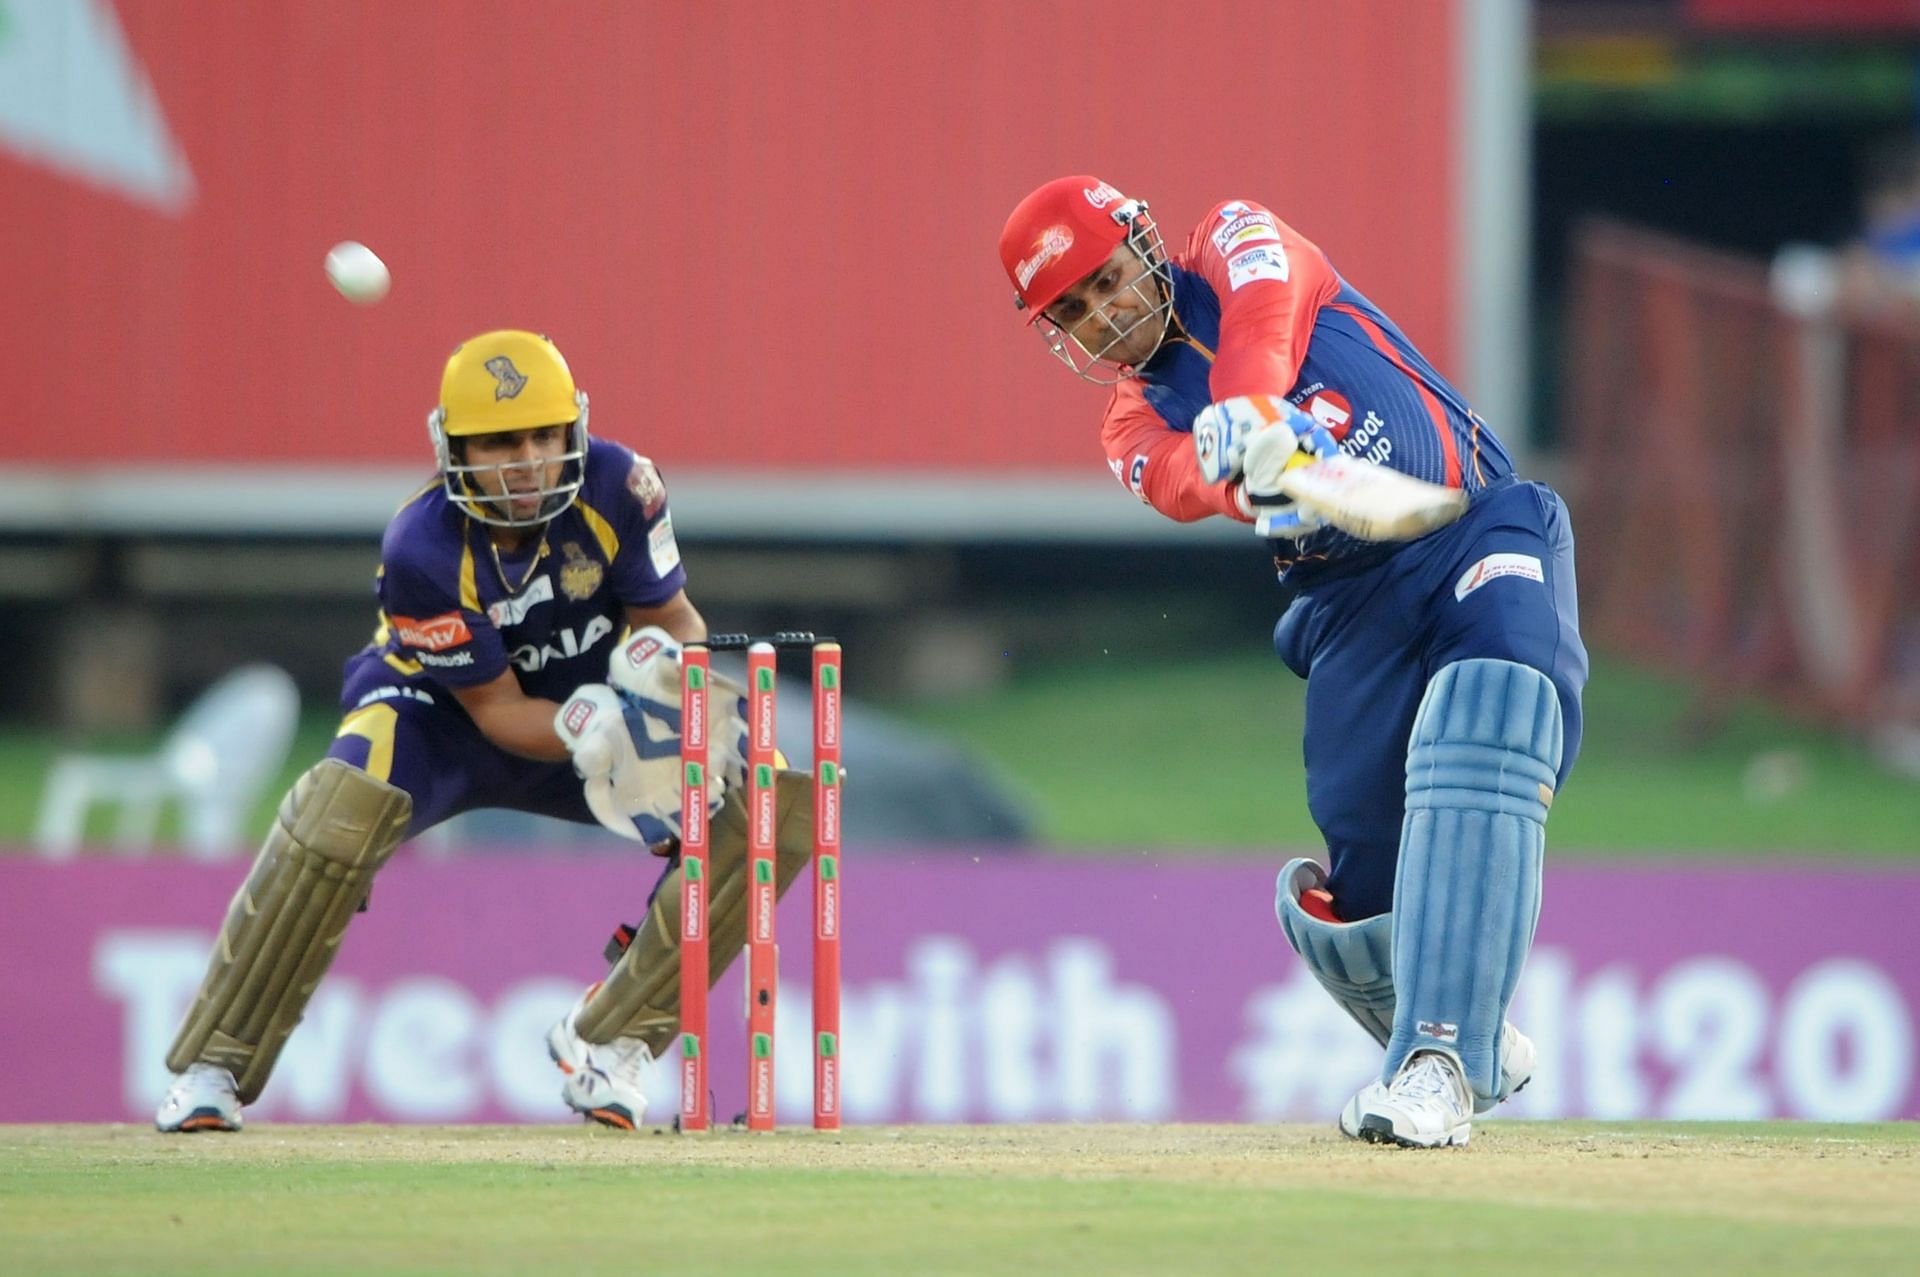 Virender Sehwag batting for Delhi. Pic: Getty Images